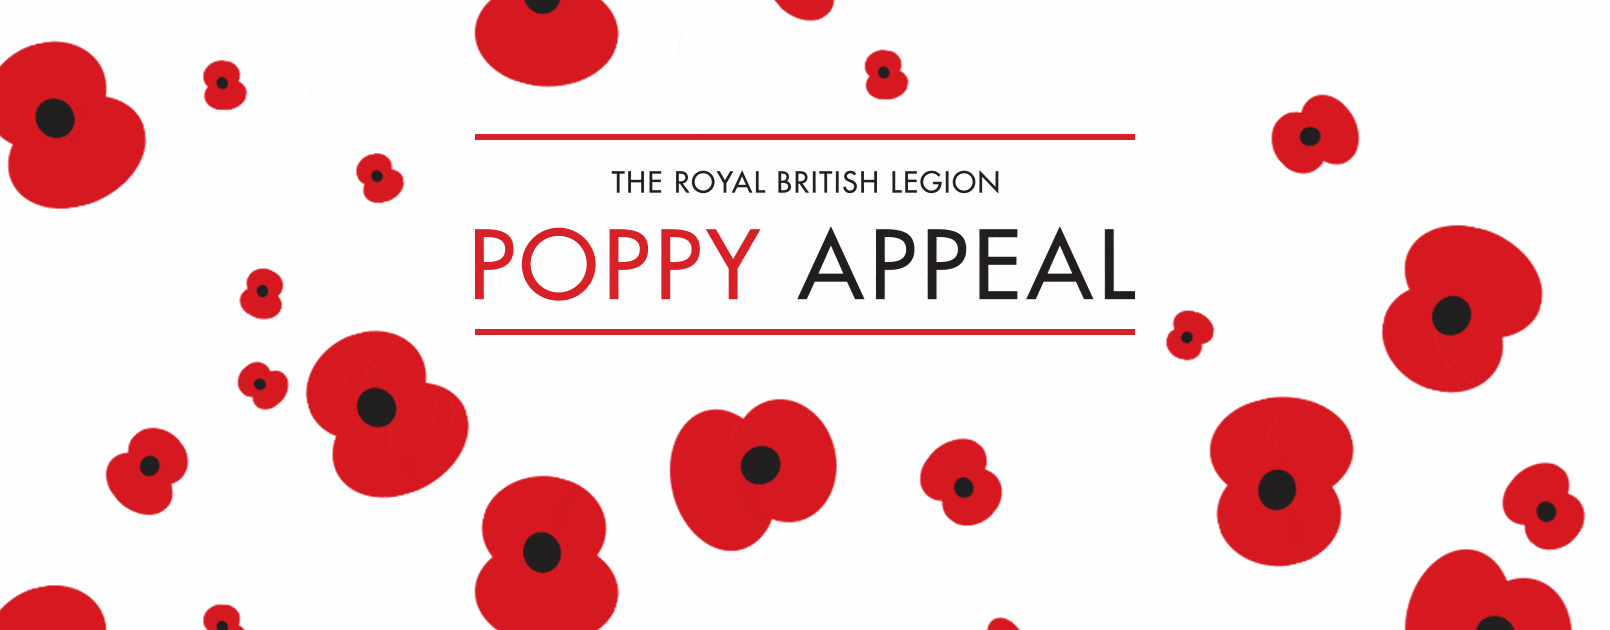 Poppy Company Logo - Poppy Appeal 2018. The Royal British Legion